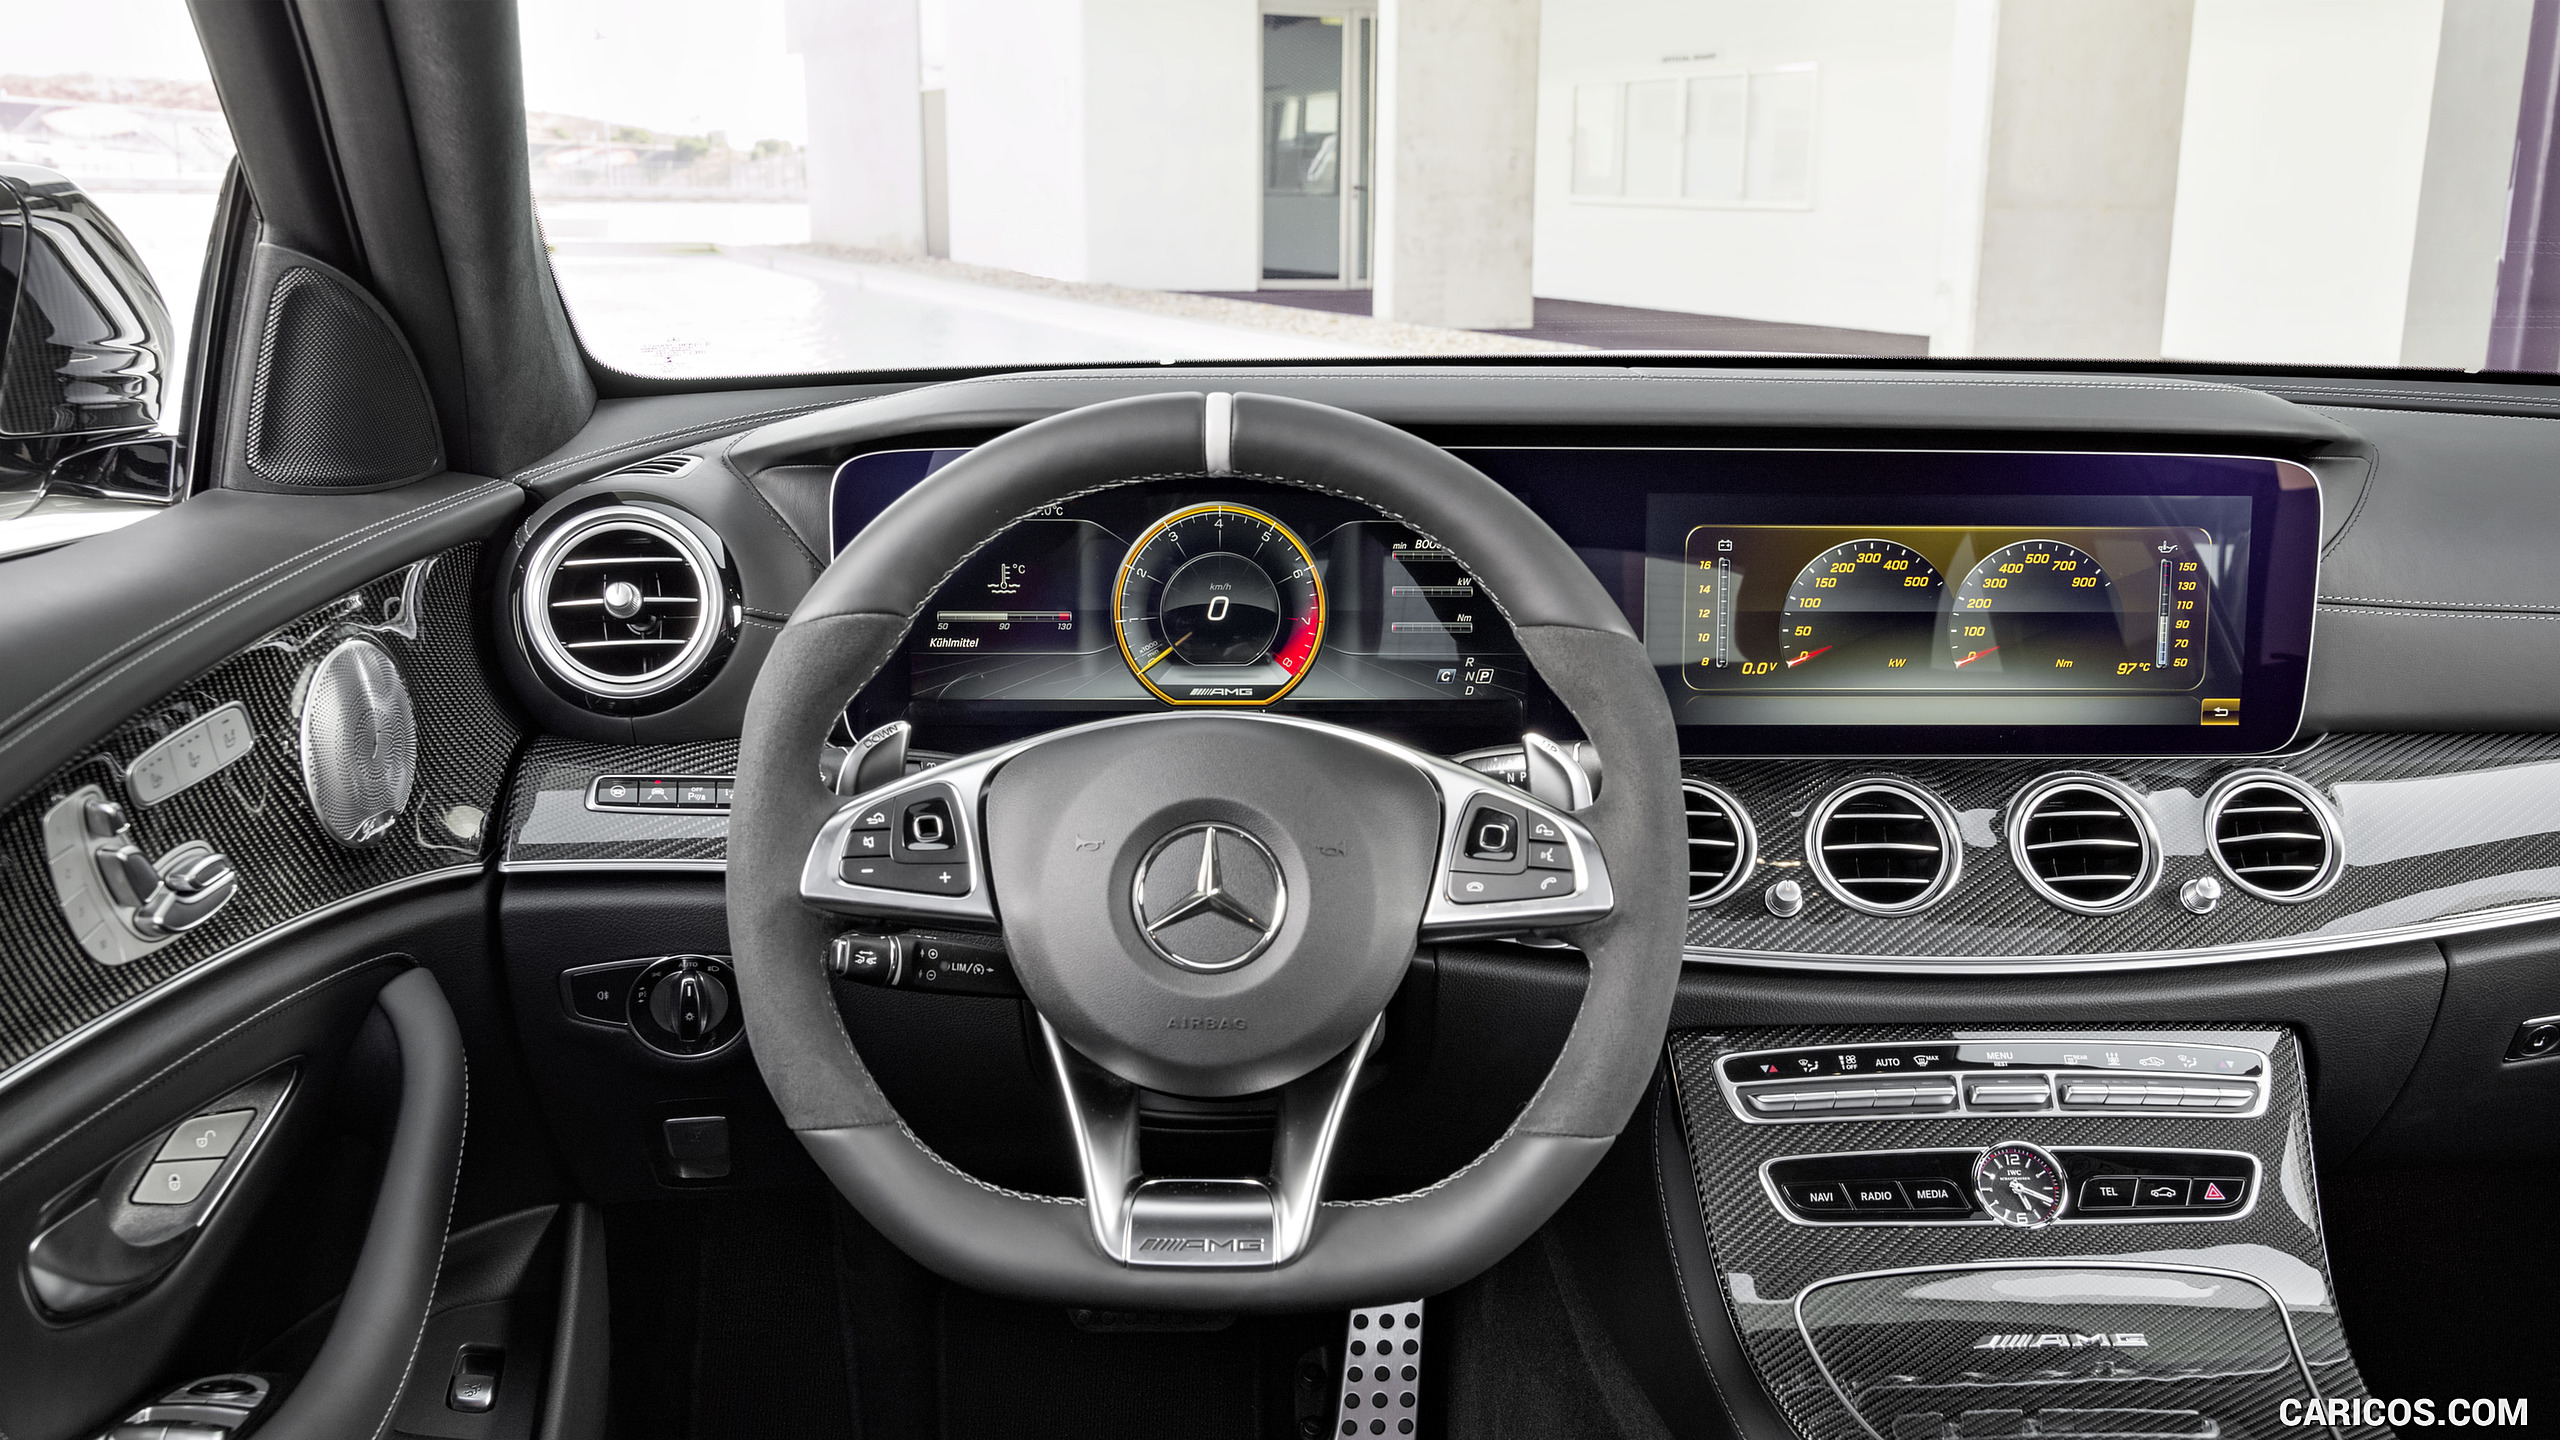 2018 Mercedes-AMG E63 S Wagon - Interior, Cockpit, #18 of 19